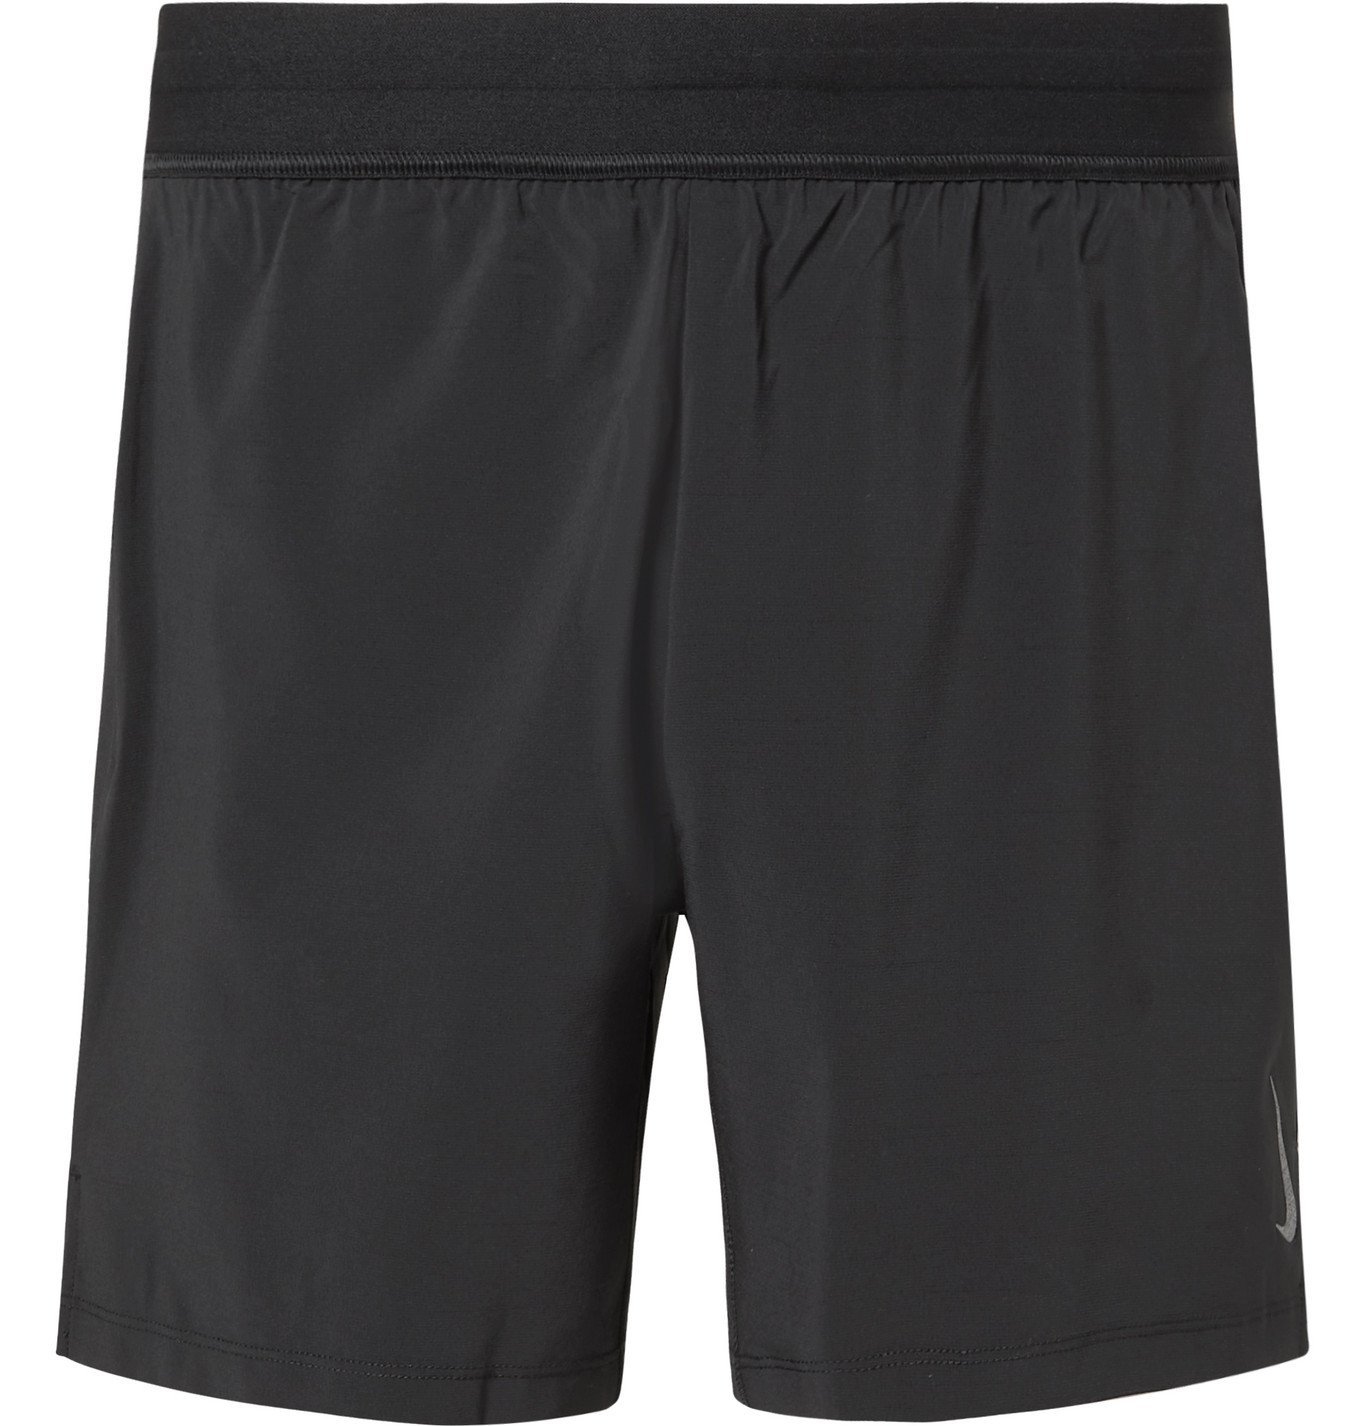 nike training shorts in black